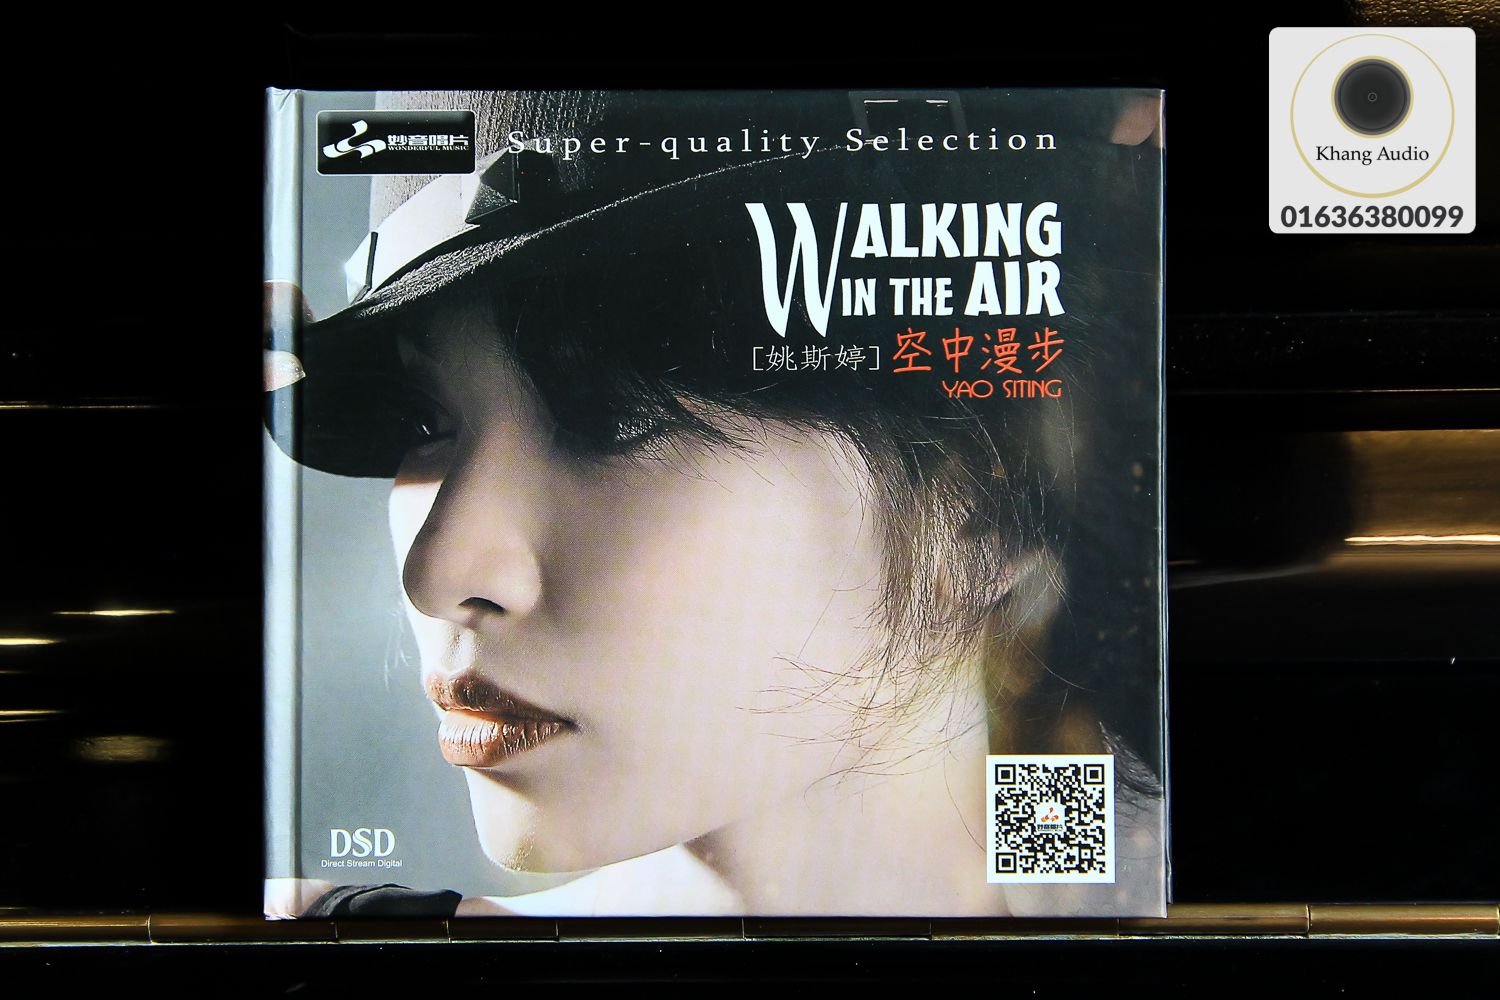 Walking In The Air - Yao Siting Khang Audio 0336380099